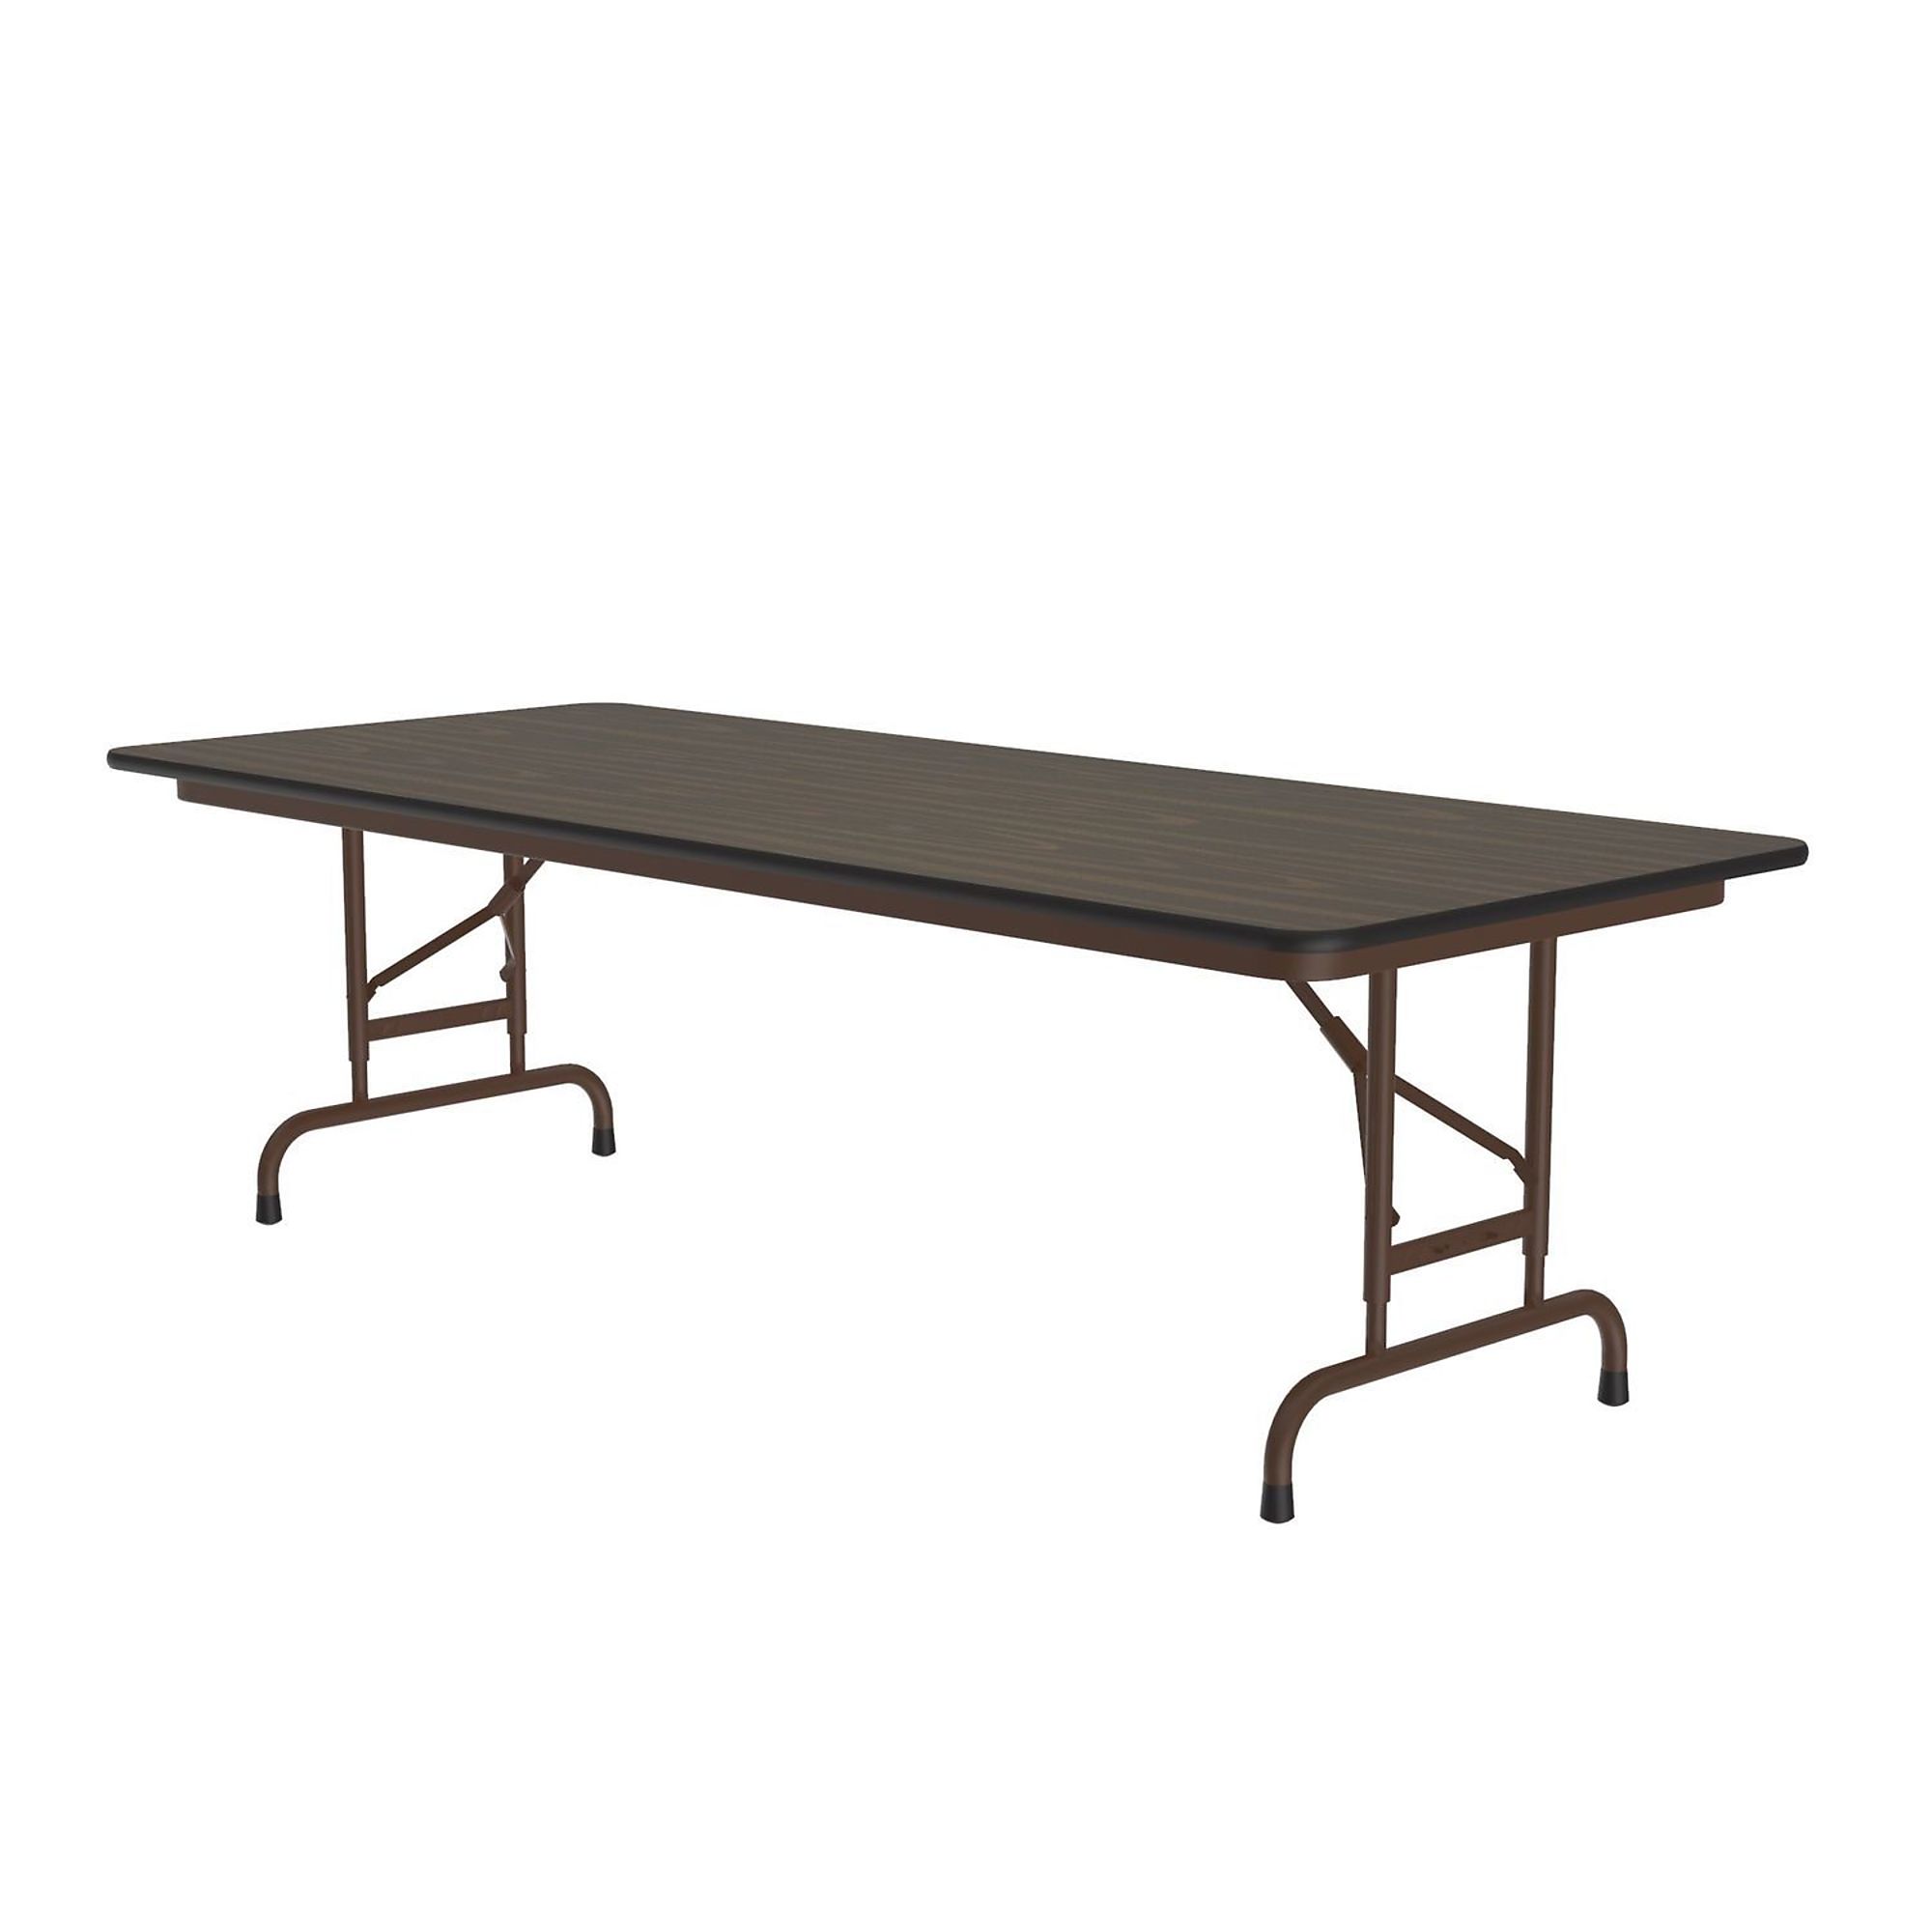 Correll, Adjustable TFL Folding Table, Walnut, 30x72, Height 29 in, Width 30 in, Length 72 in, Model CFA3072TF-01